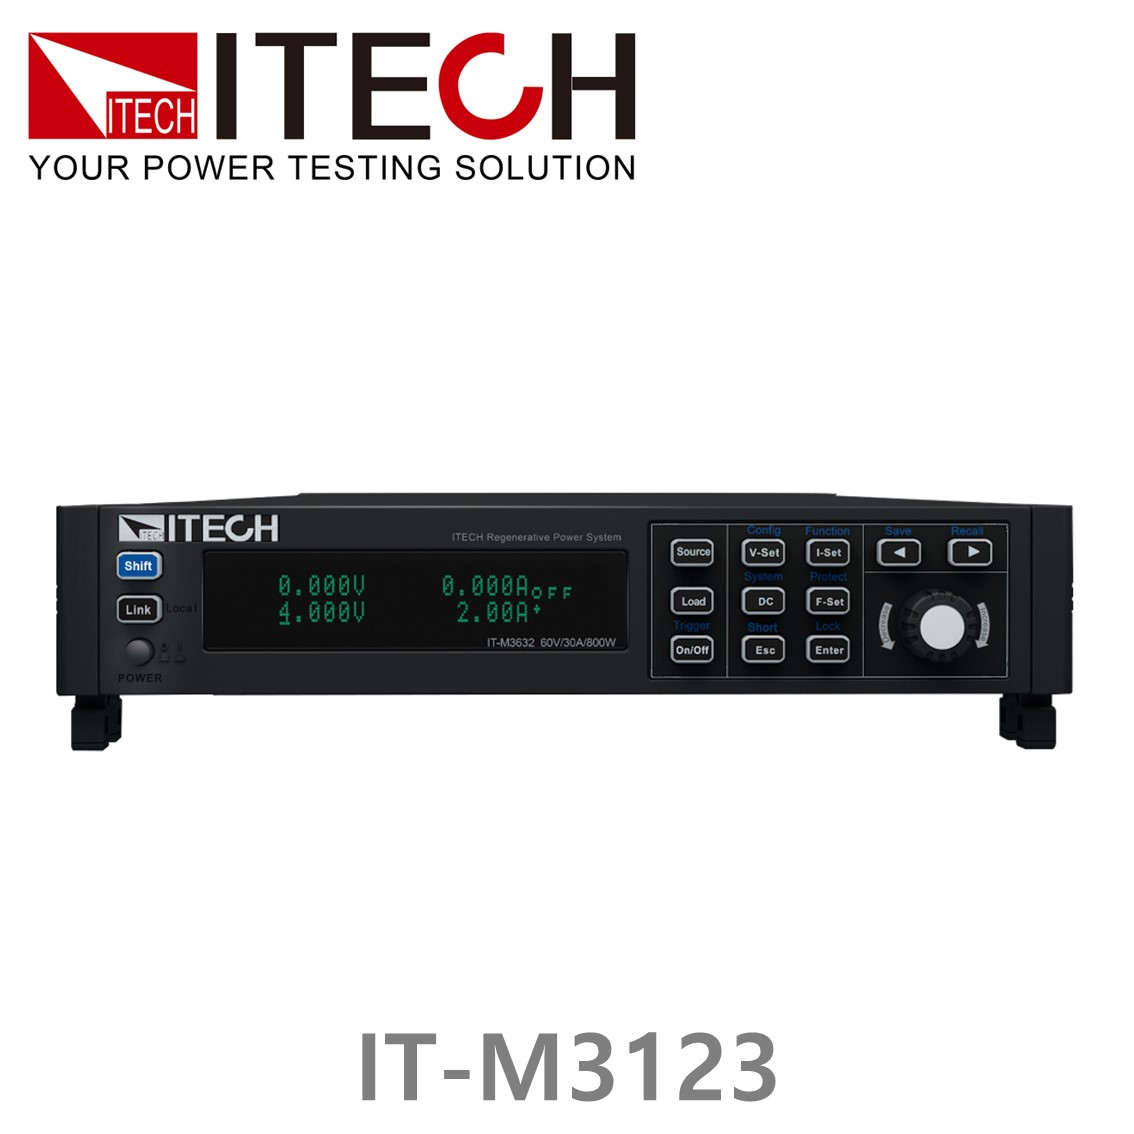 [ ITECH ] IT-M3123 초소형 광대역 DC파워서플라이 (150V/12A/850W), DC전원공급기